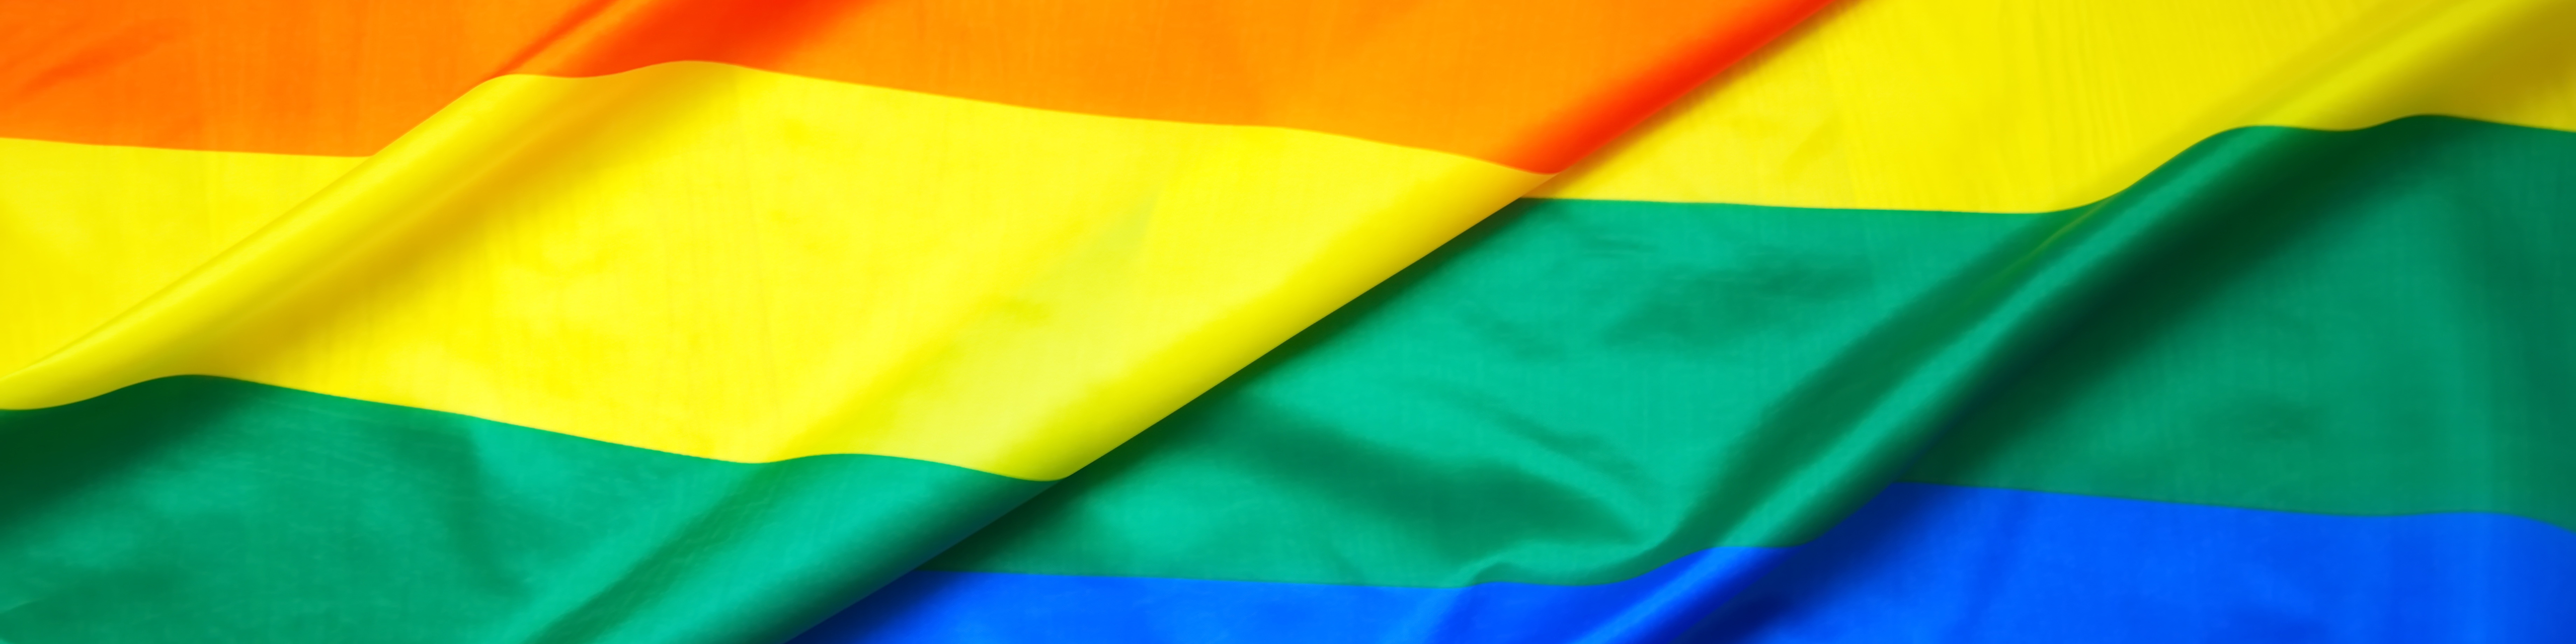 Close up of rainbow pride flag